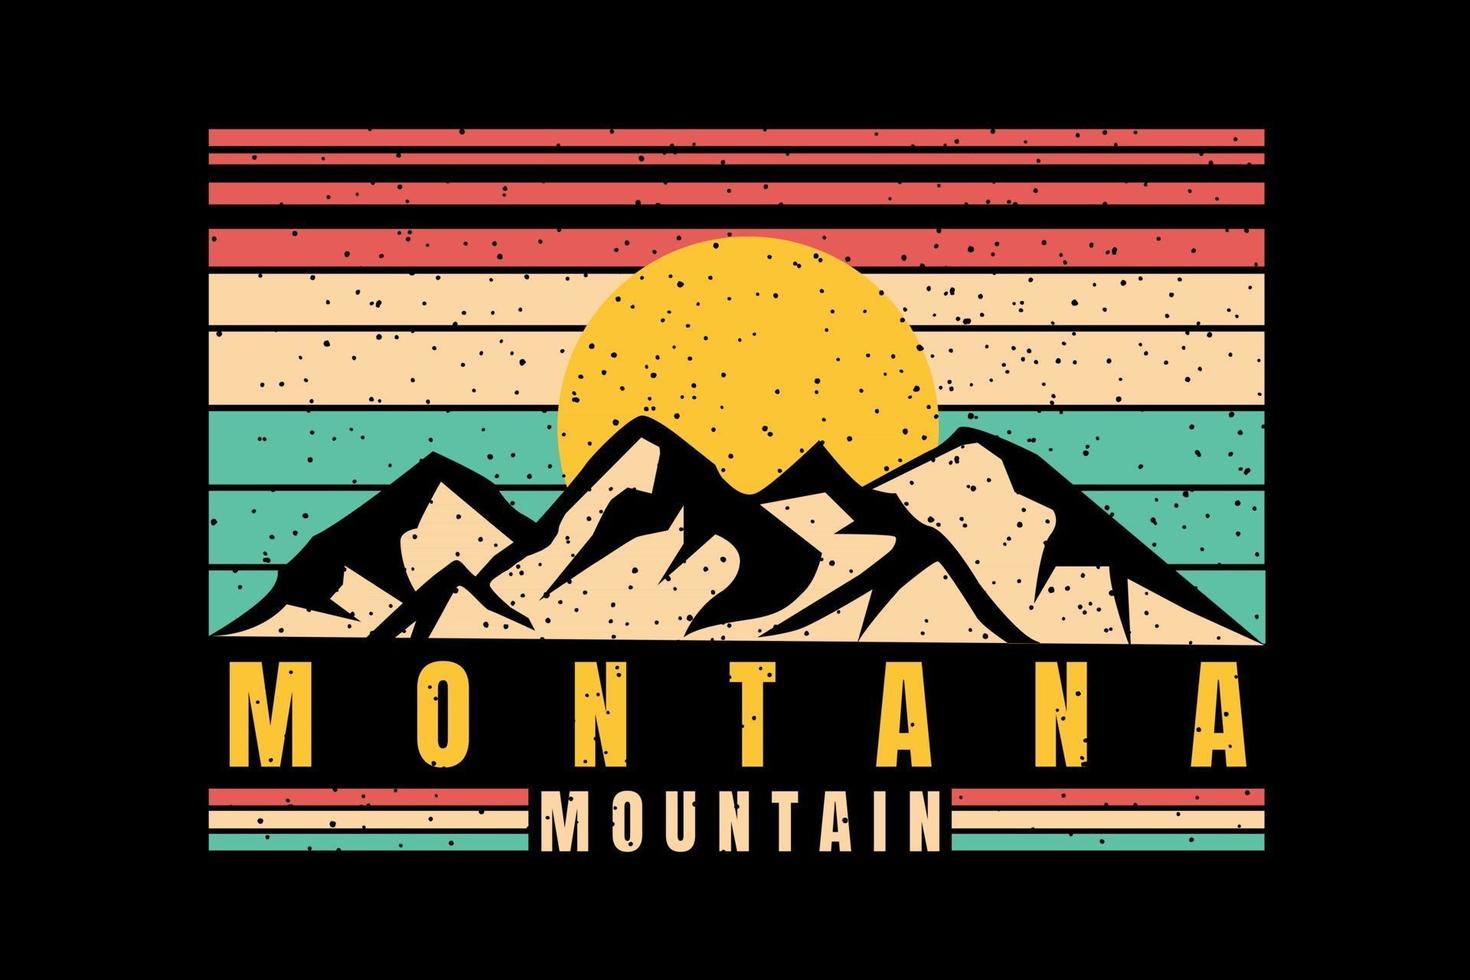 t-shirt silhouette montagna bellissimo stile vintage retrò vettore